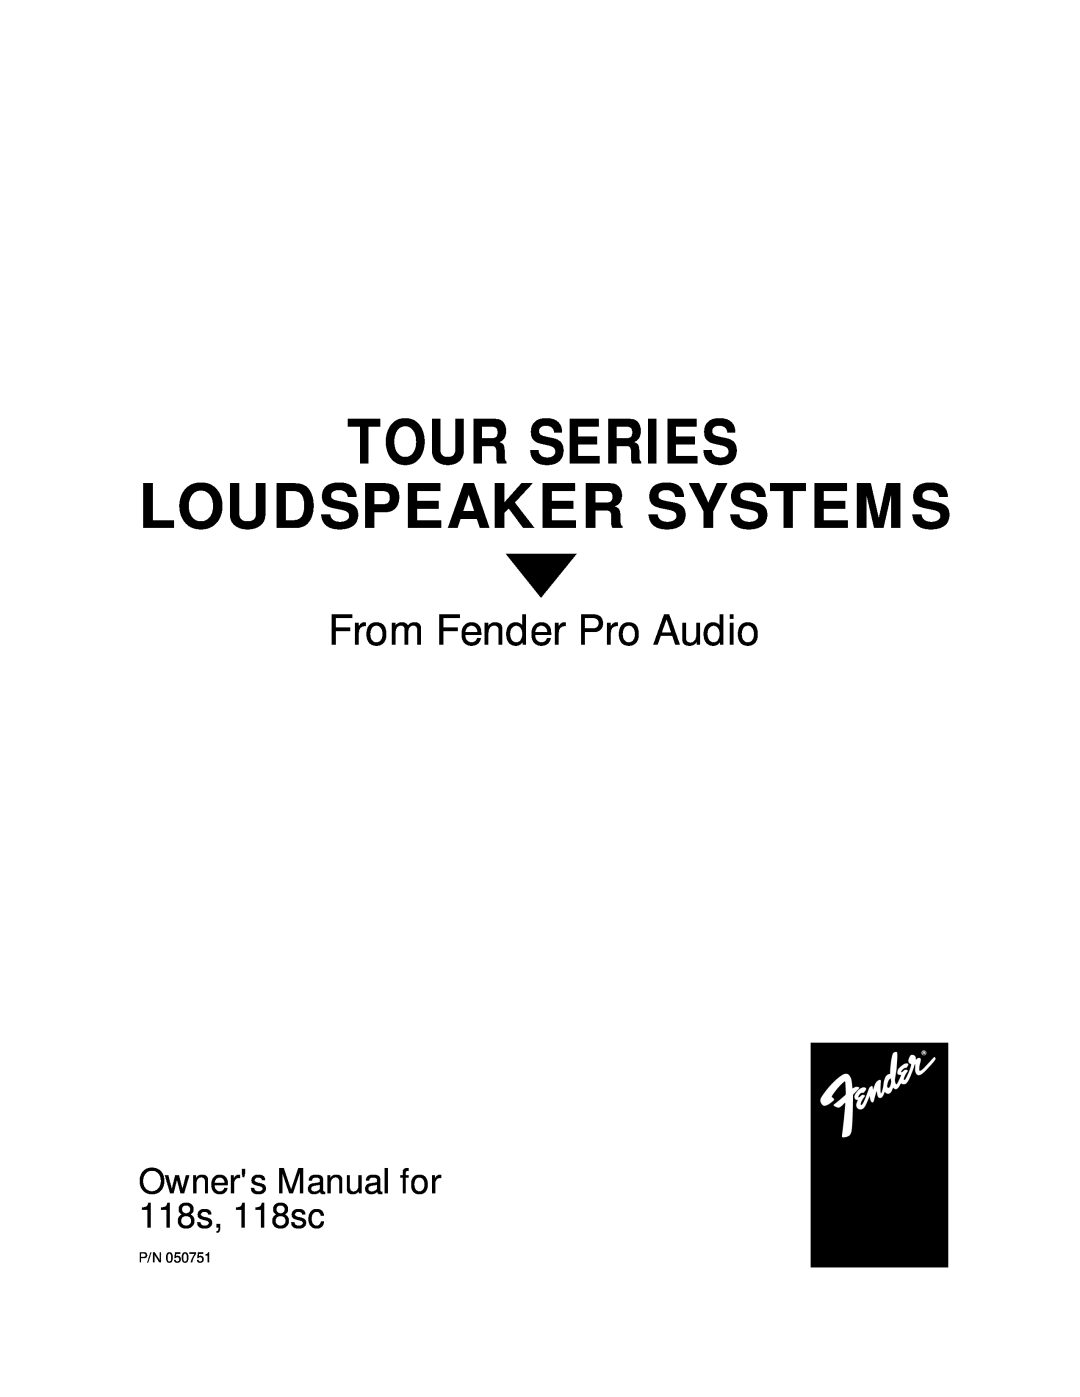 Fender 118SC owner manual Tour Series Loudspeaker Systems, From Fender Pro Audio 